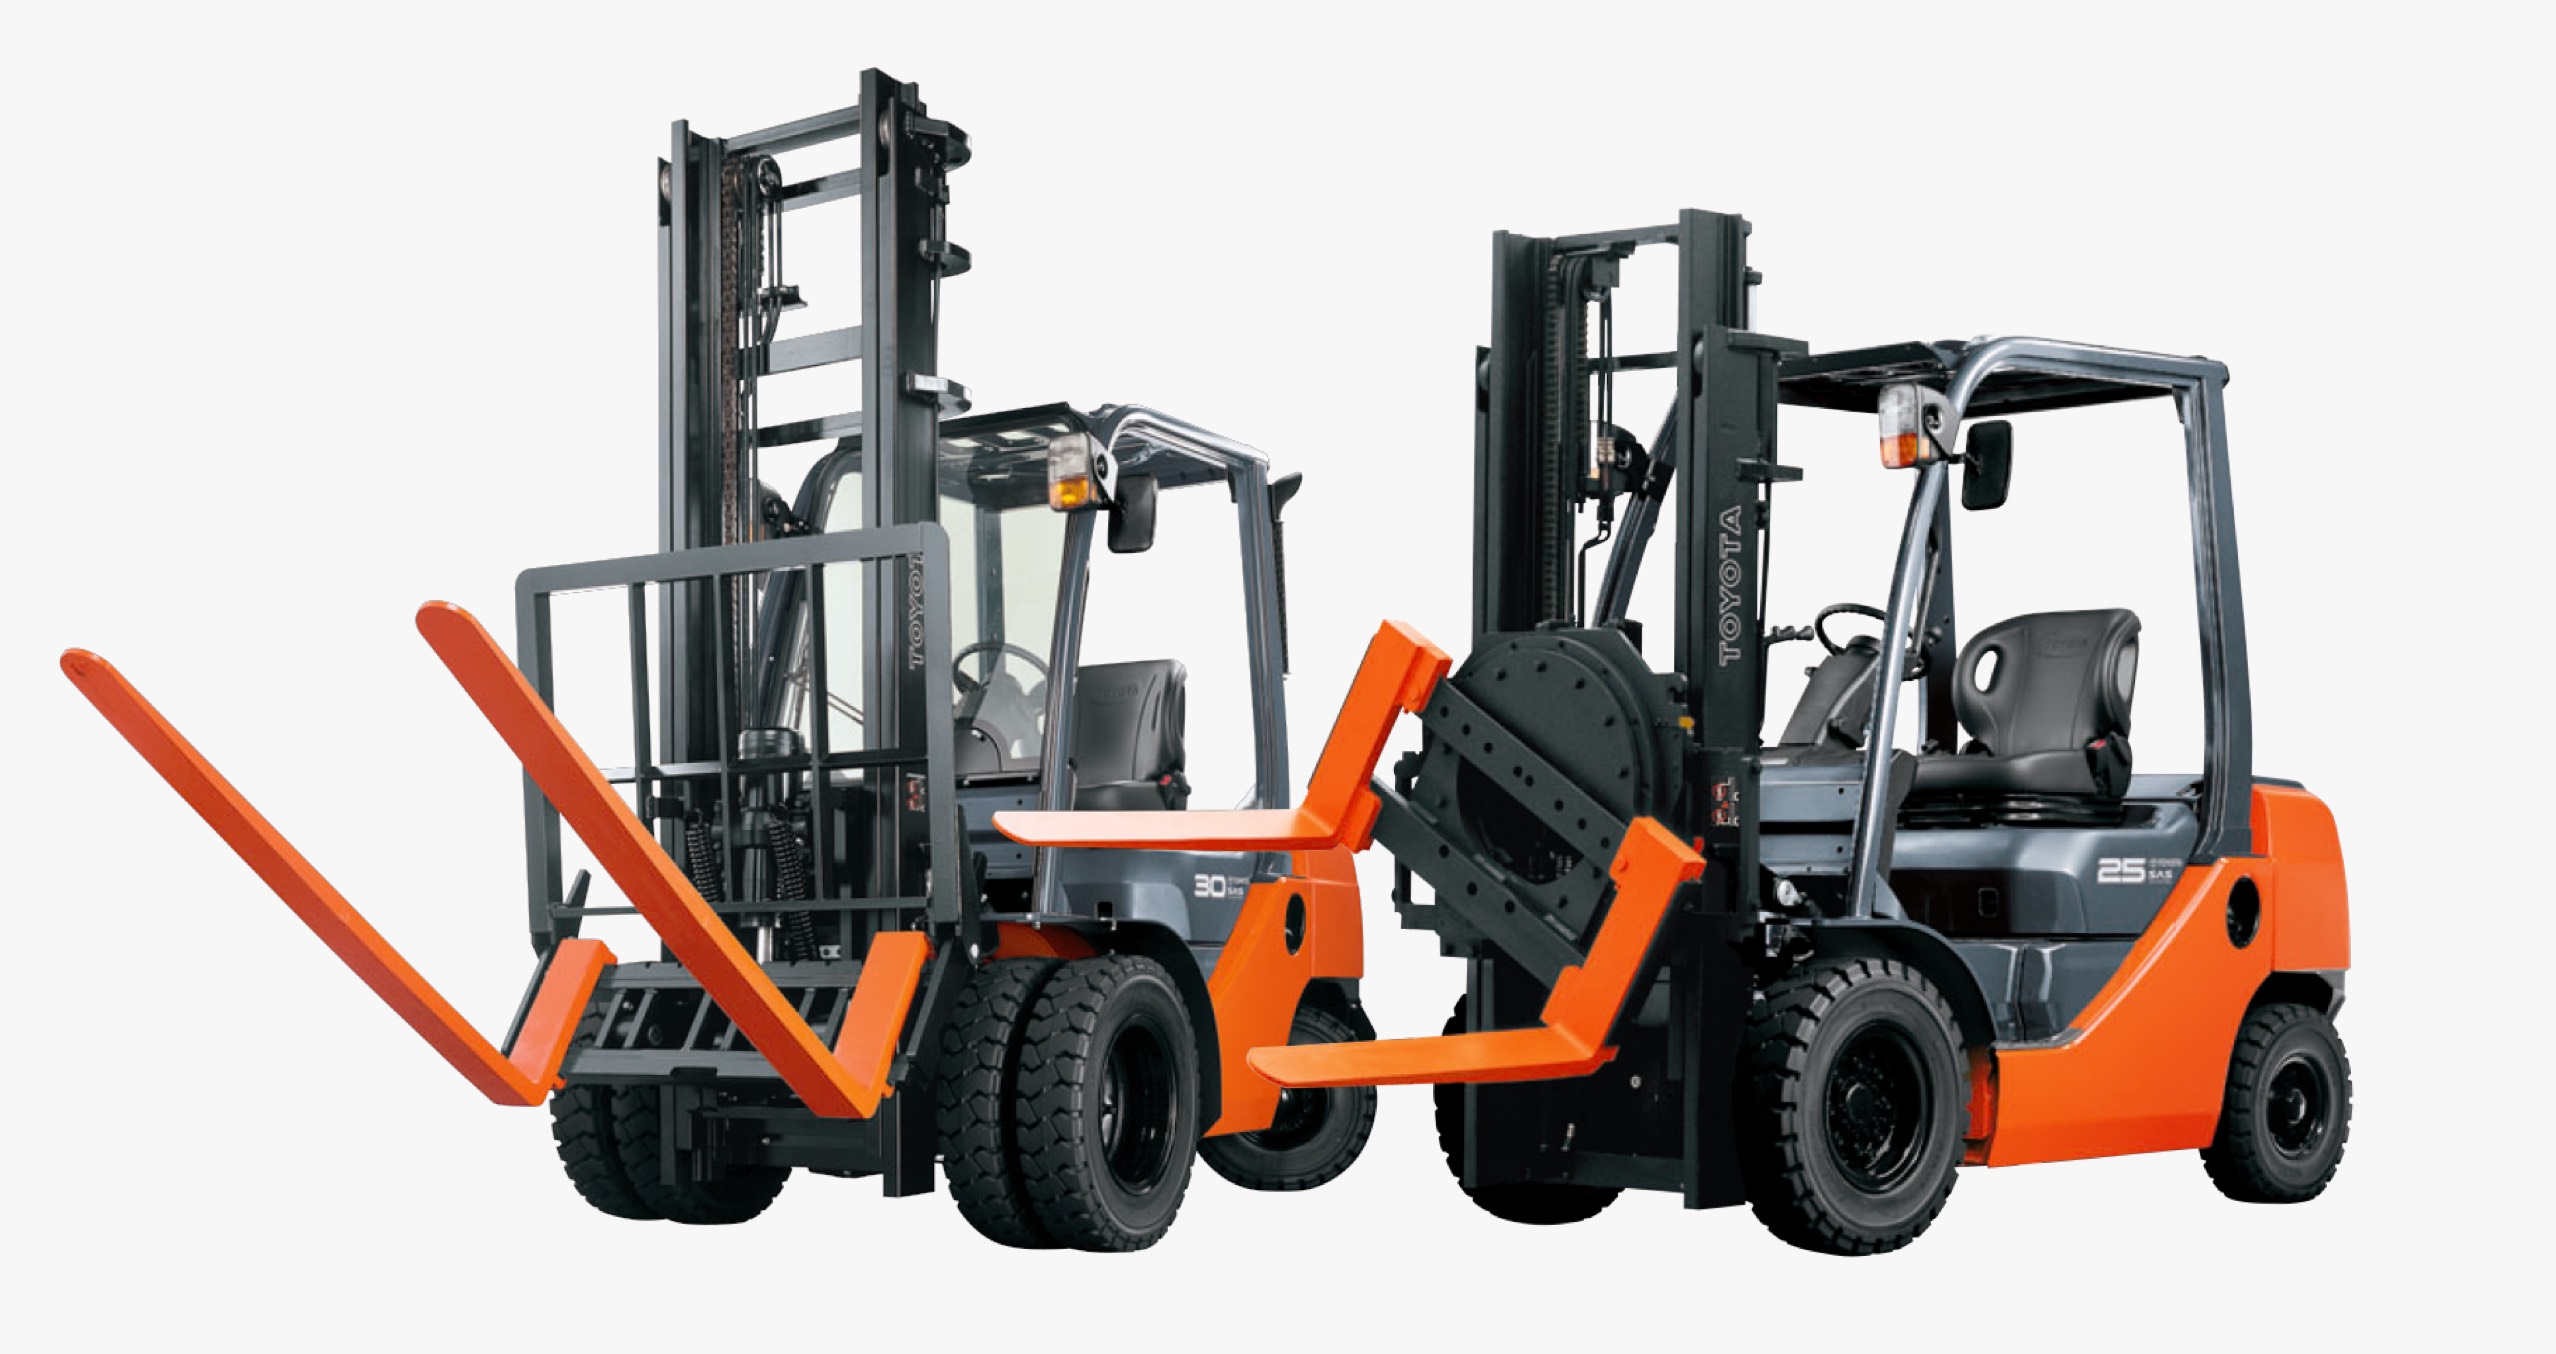 Forklift Attachment Sales 1@2x 1